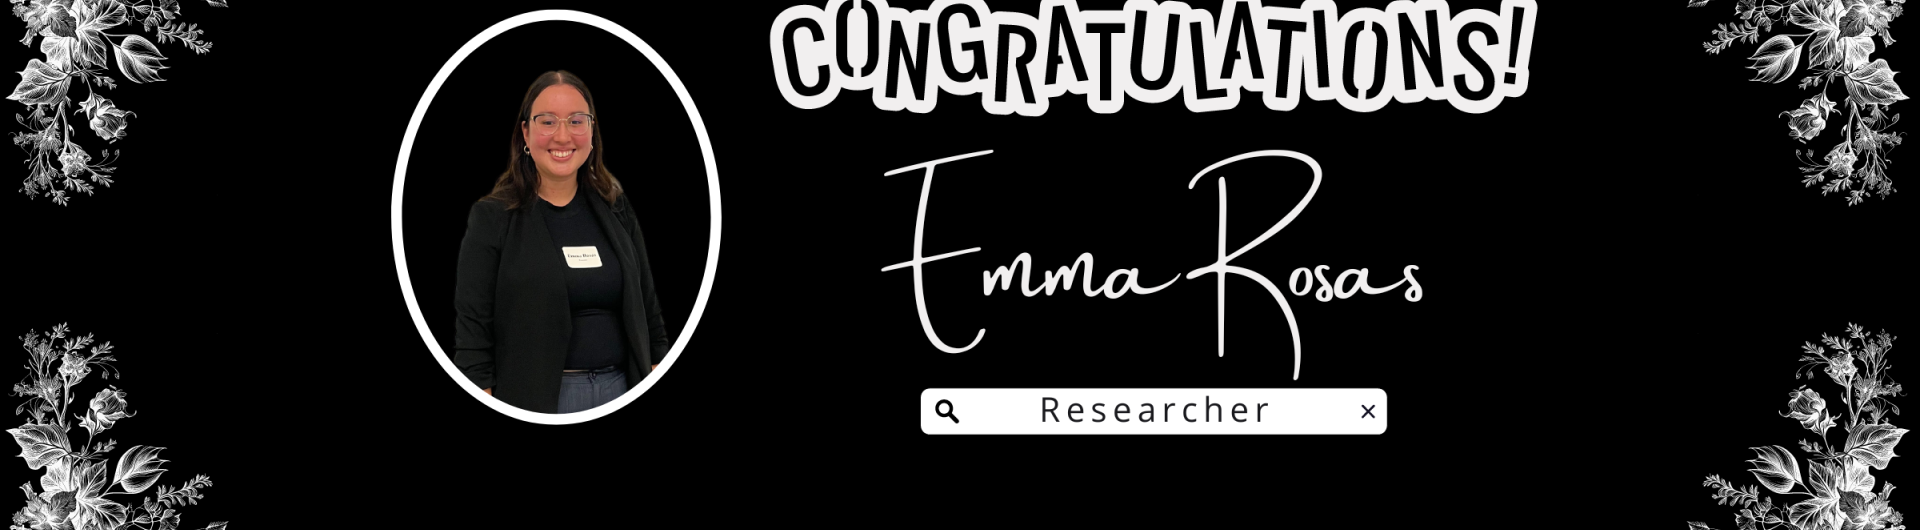 Emma Rosas Congratulations - Banner